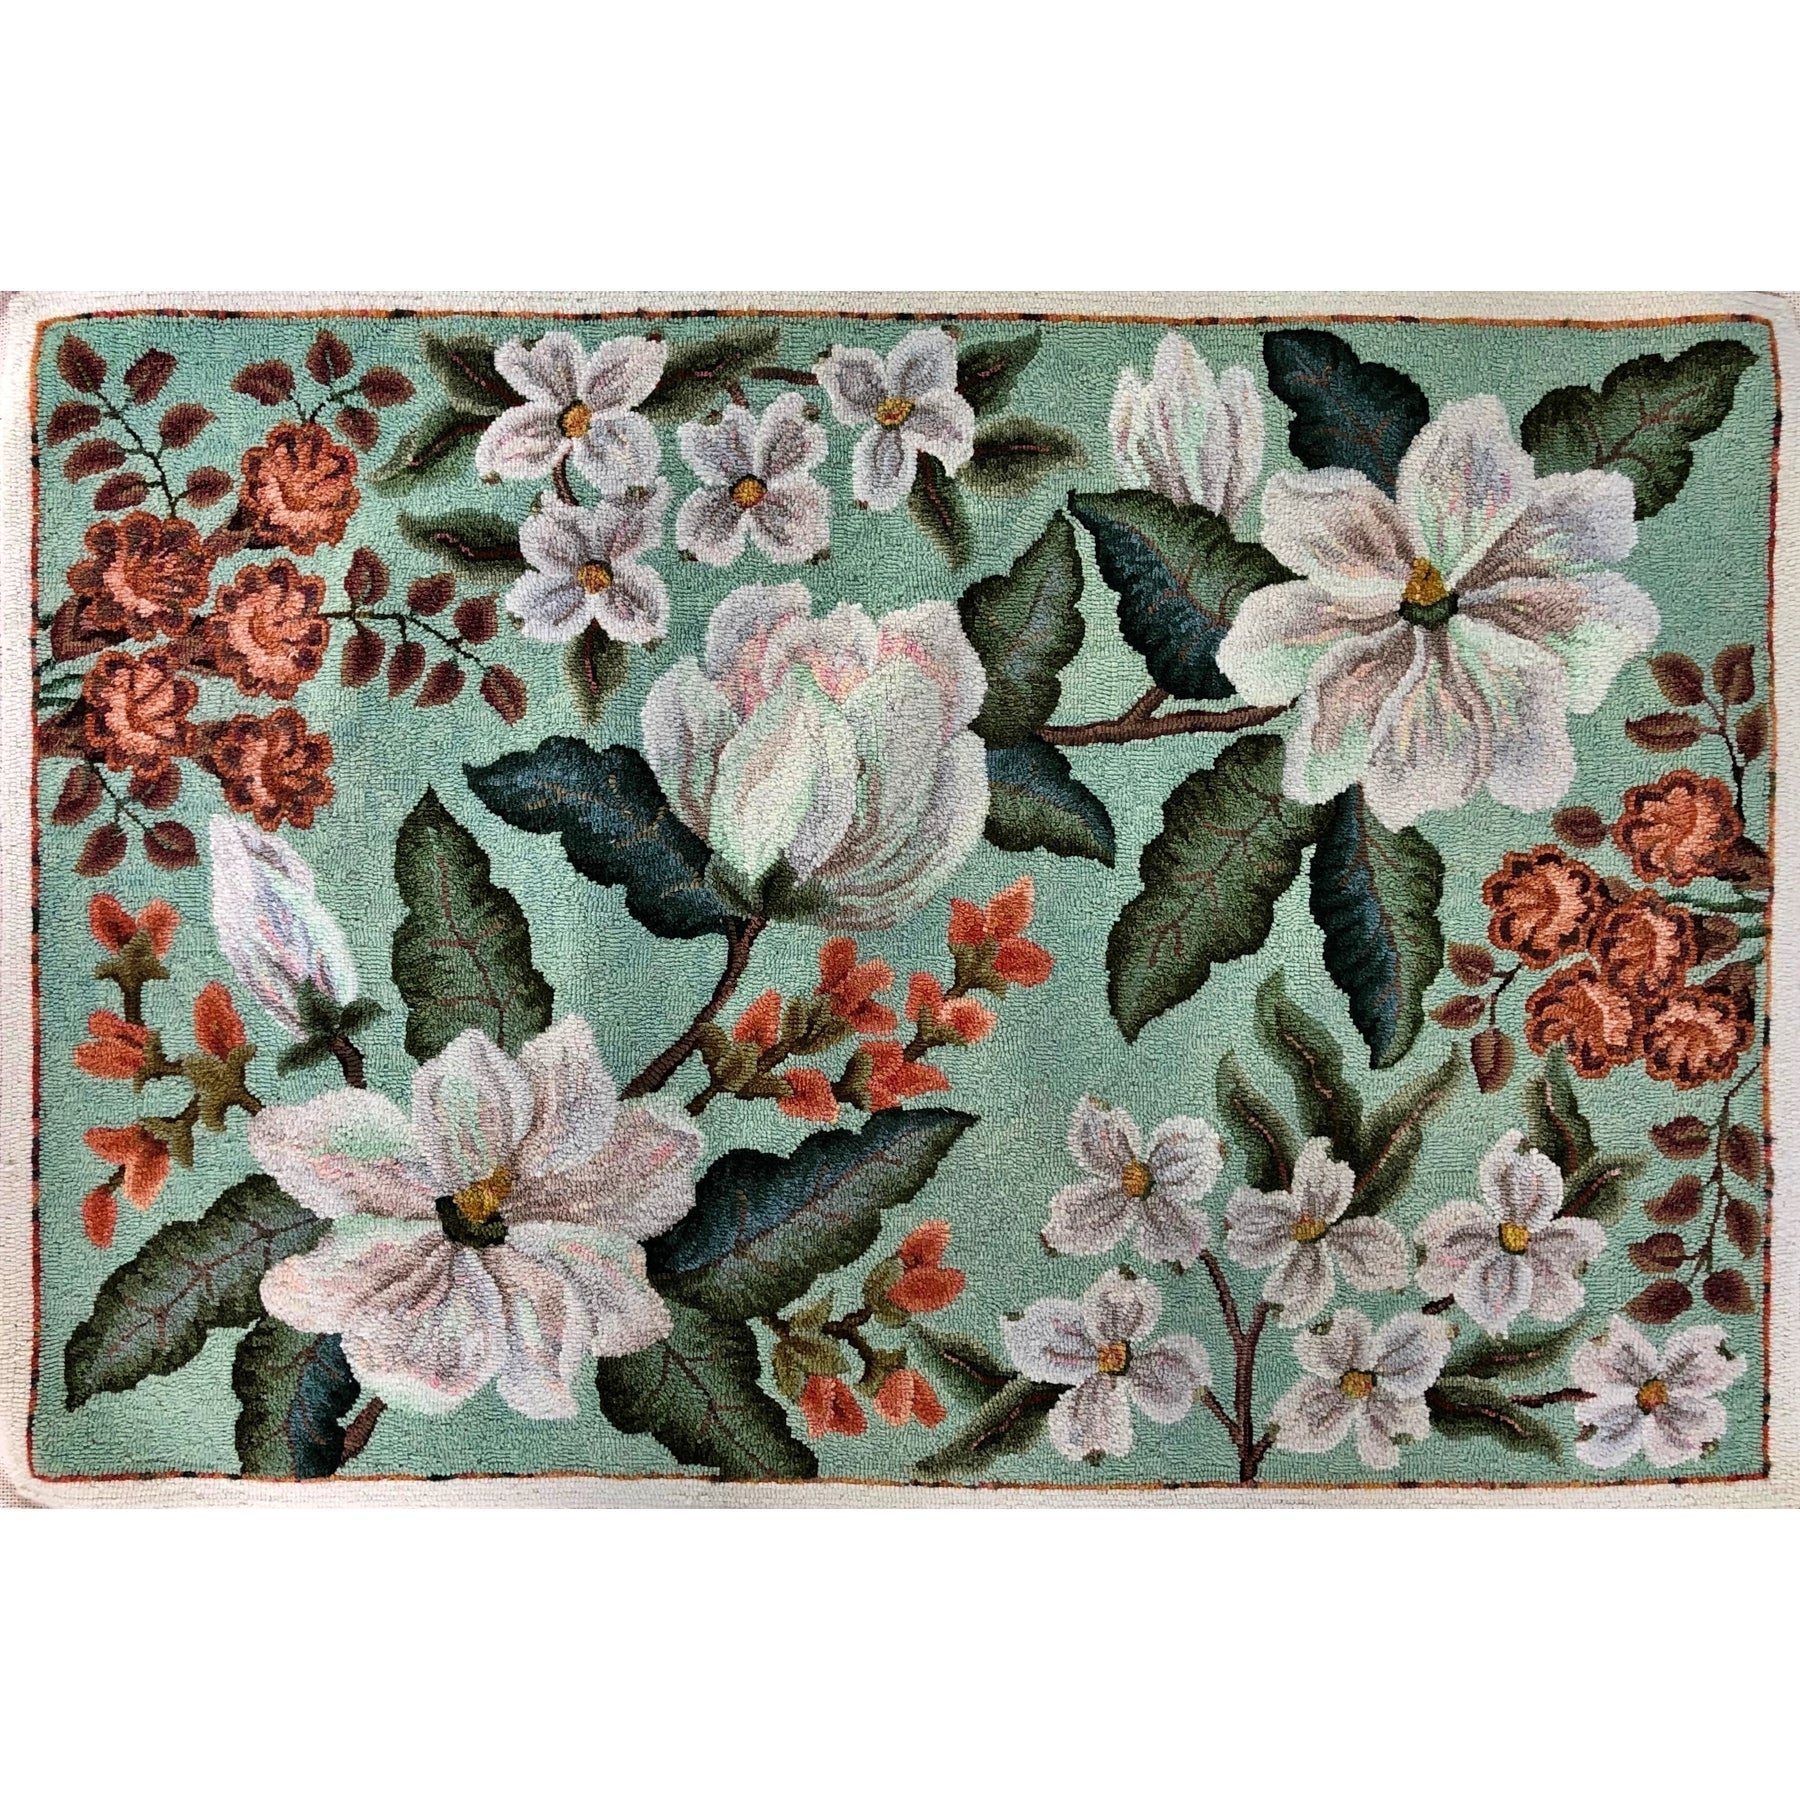 Flora-bundance, rug hooked by Jane McGown Flynn